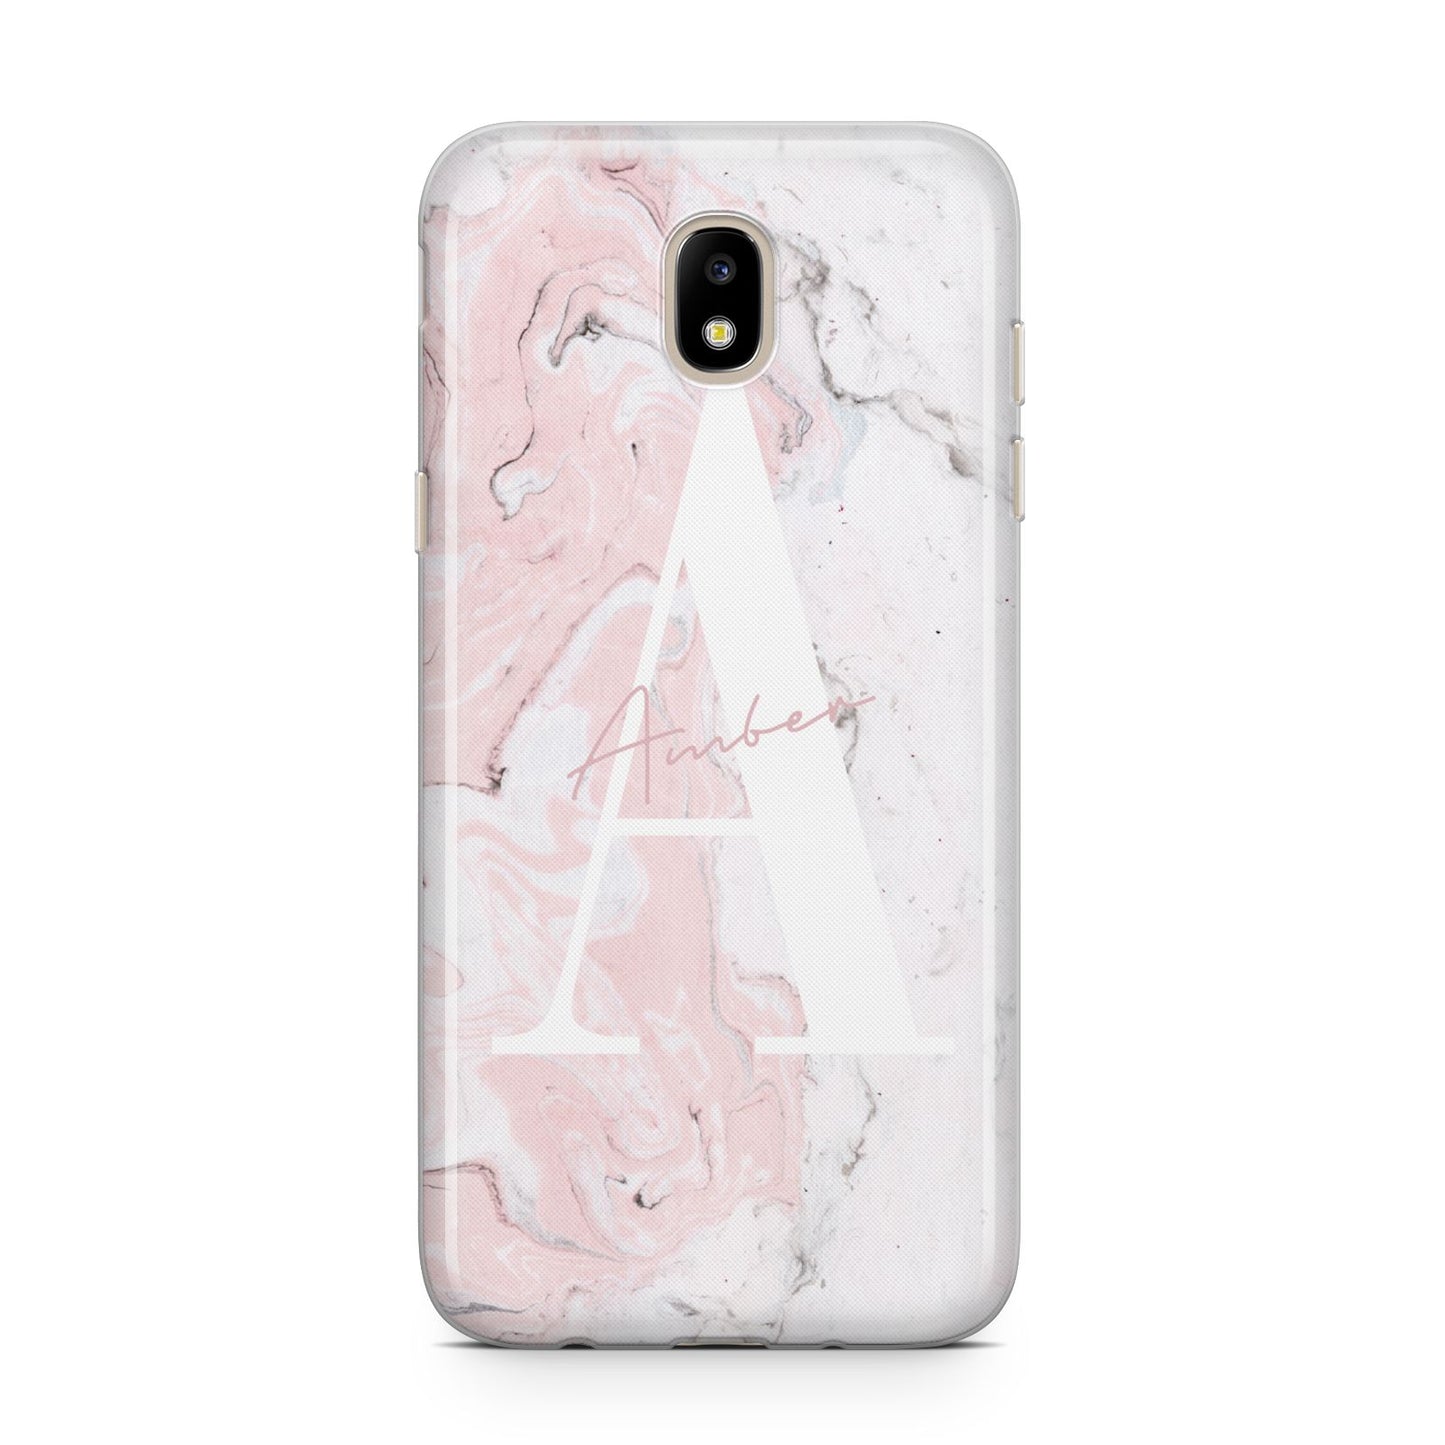 Monogrammed Pink White Ink Marble Samsung J5 2017 Case